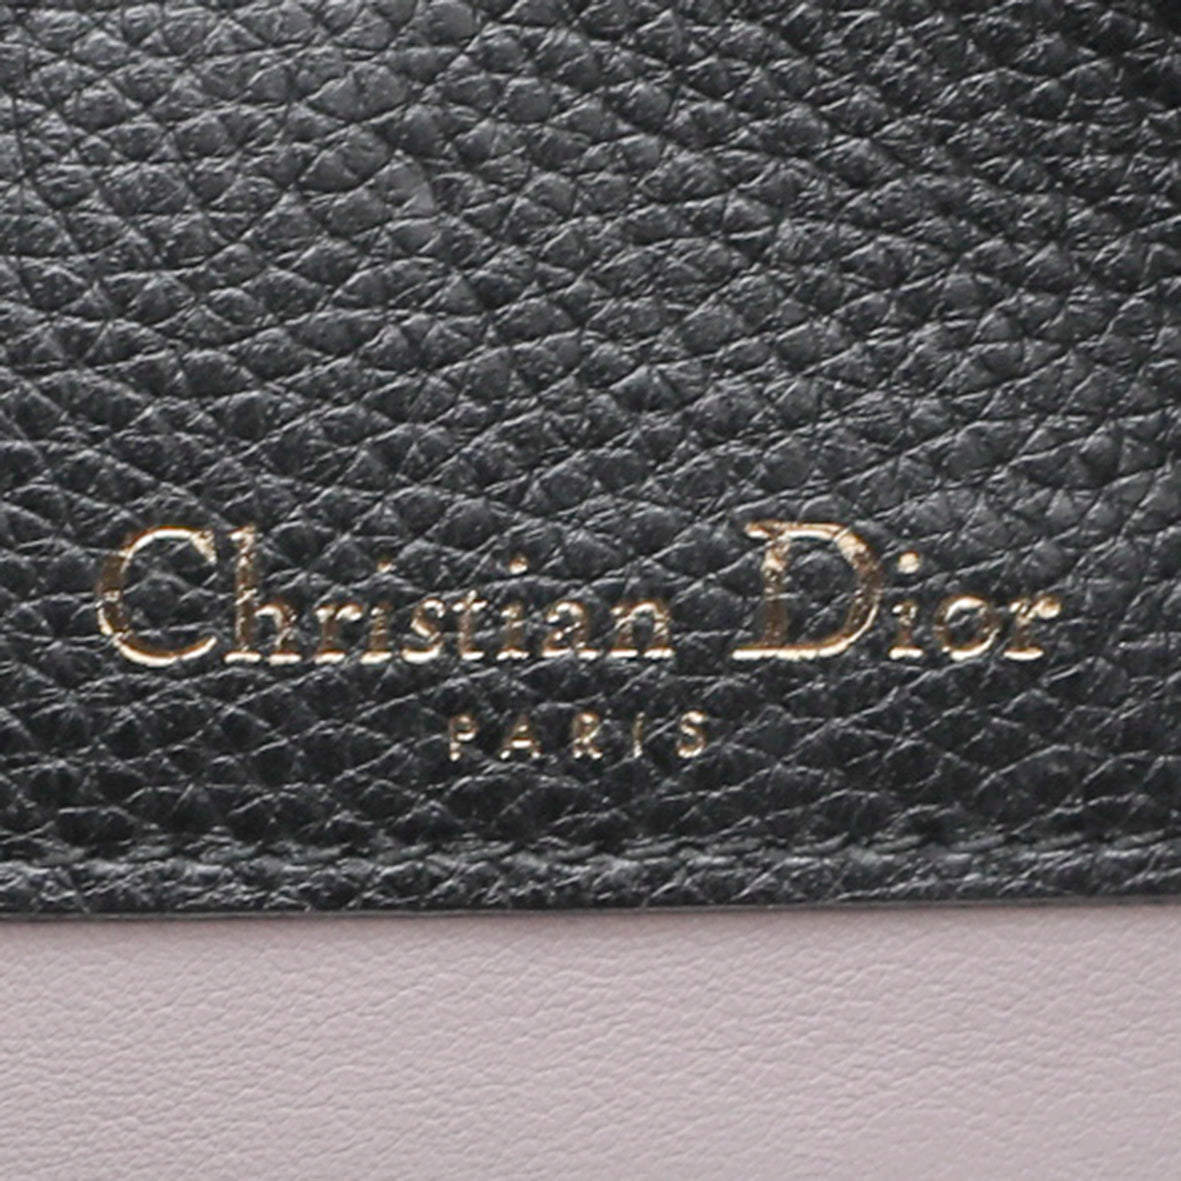 Christian Dior Black Bar Tote Small Bag